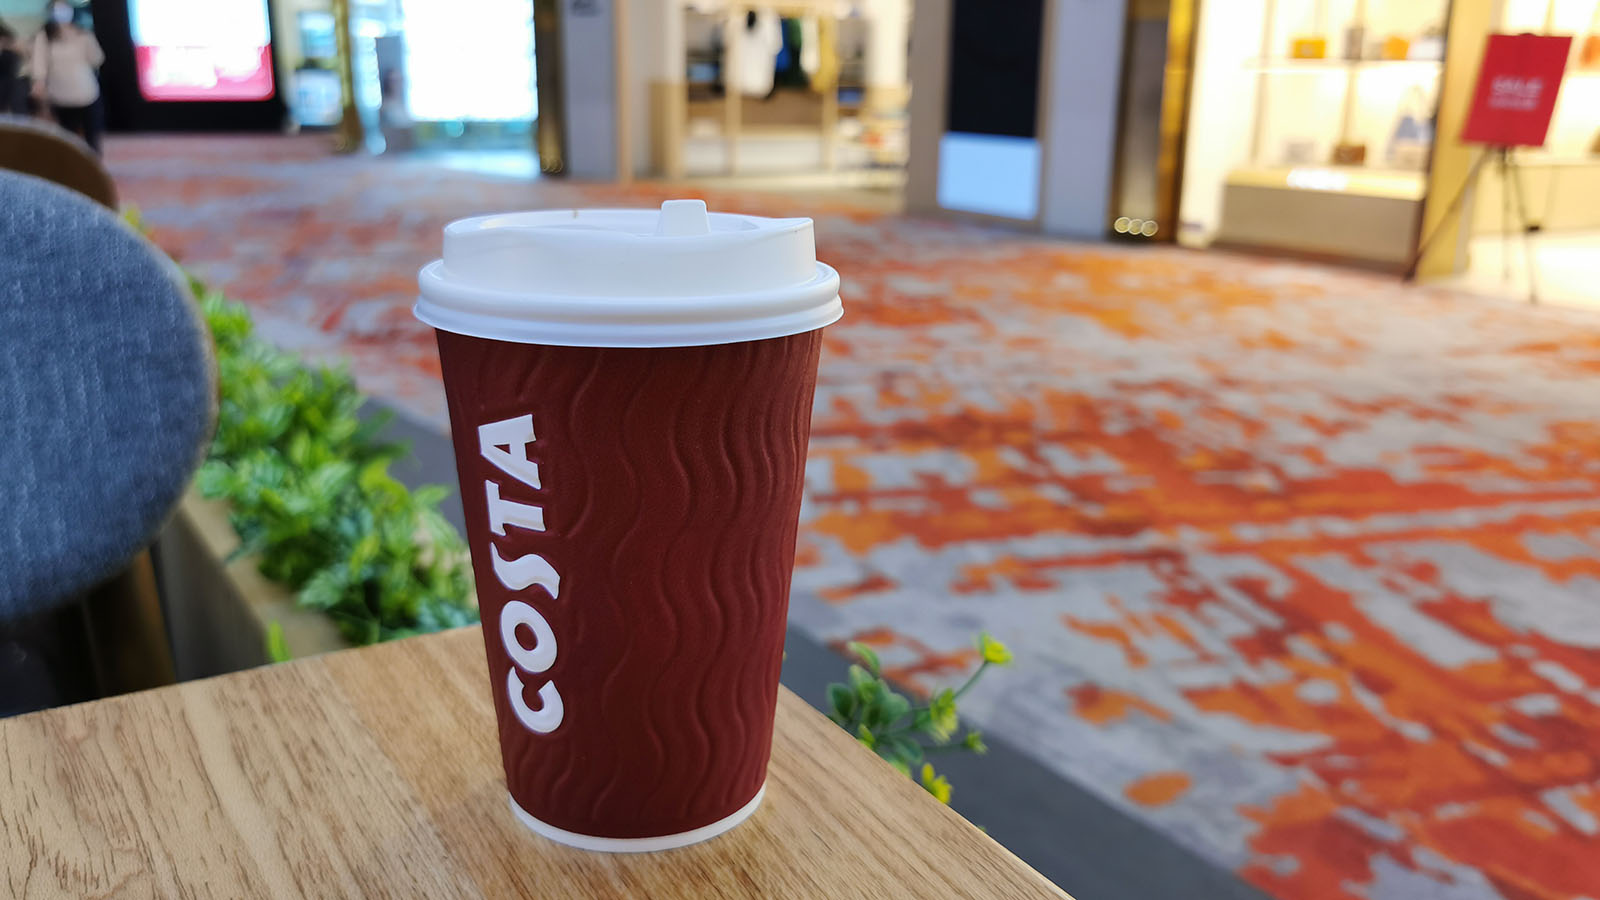 Coffee before flying Jetstar Asia Economy